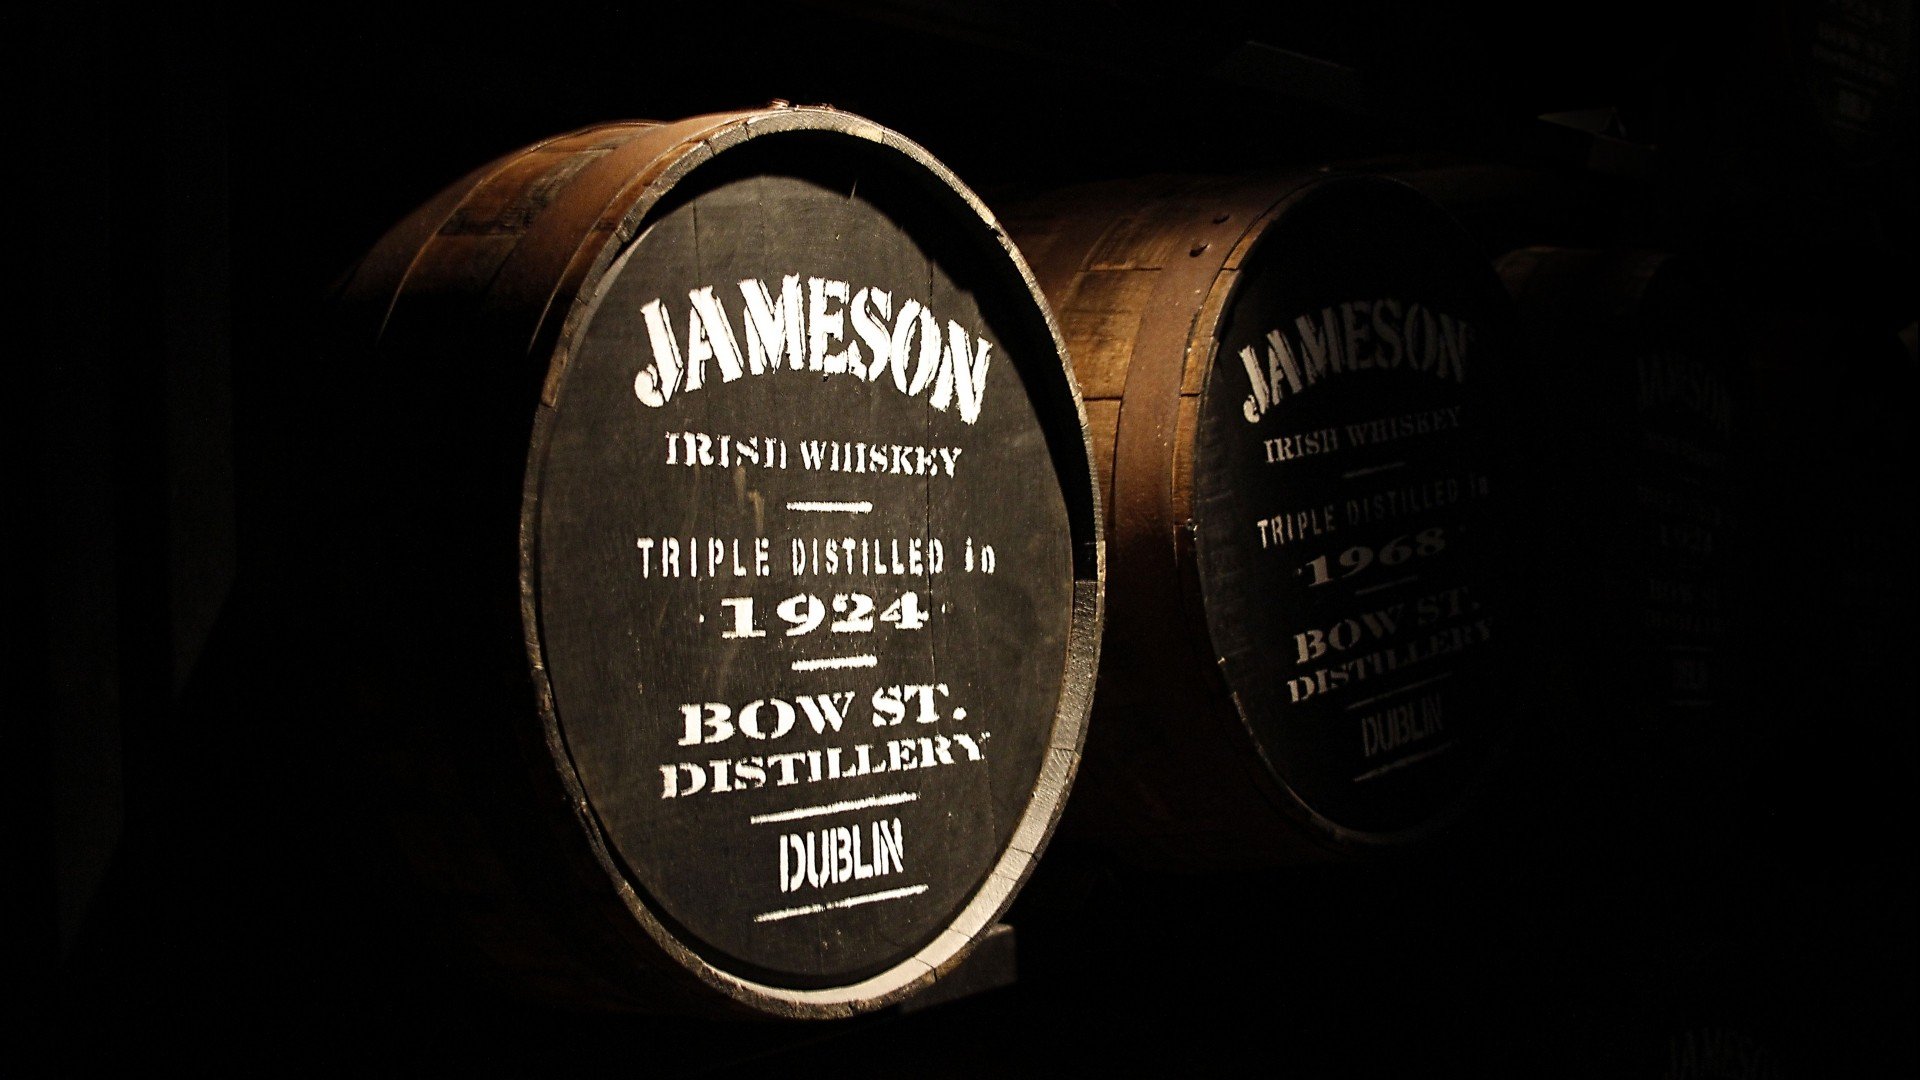 wood, Wooden surface, Whiskey, Brand, Alcohol, Jameson, Barrels, Dublin, Ireland, Cellars Wallpaper